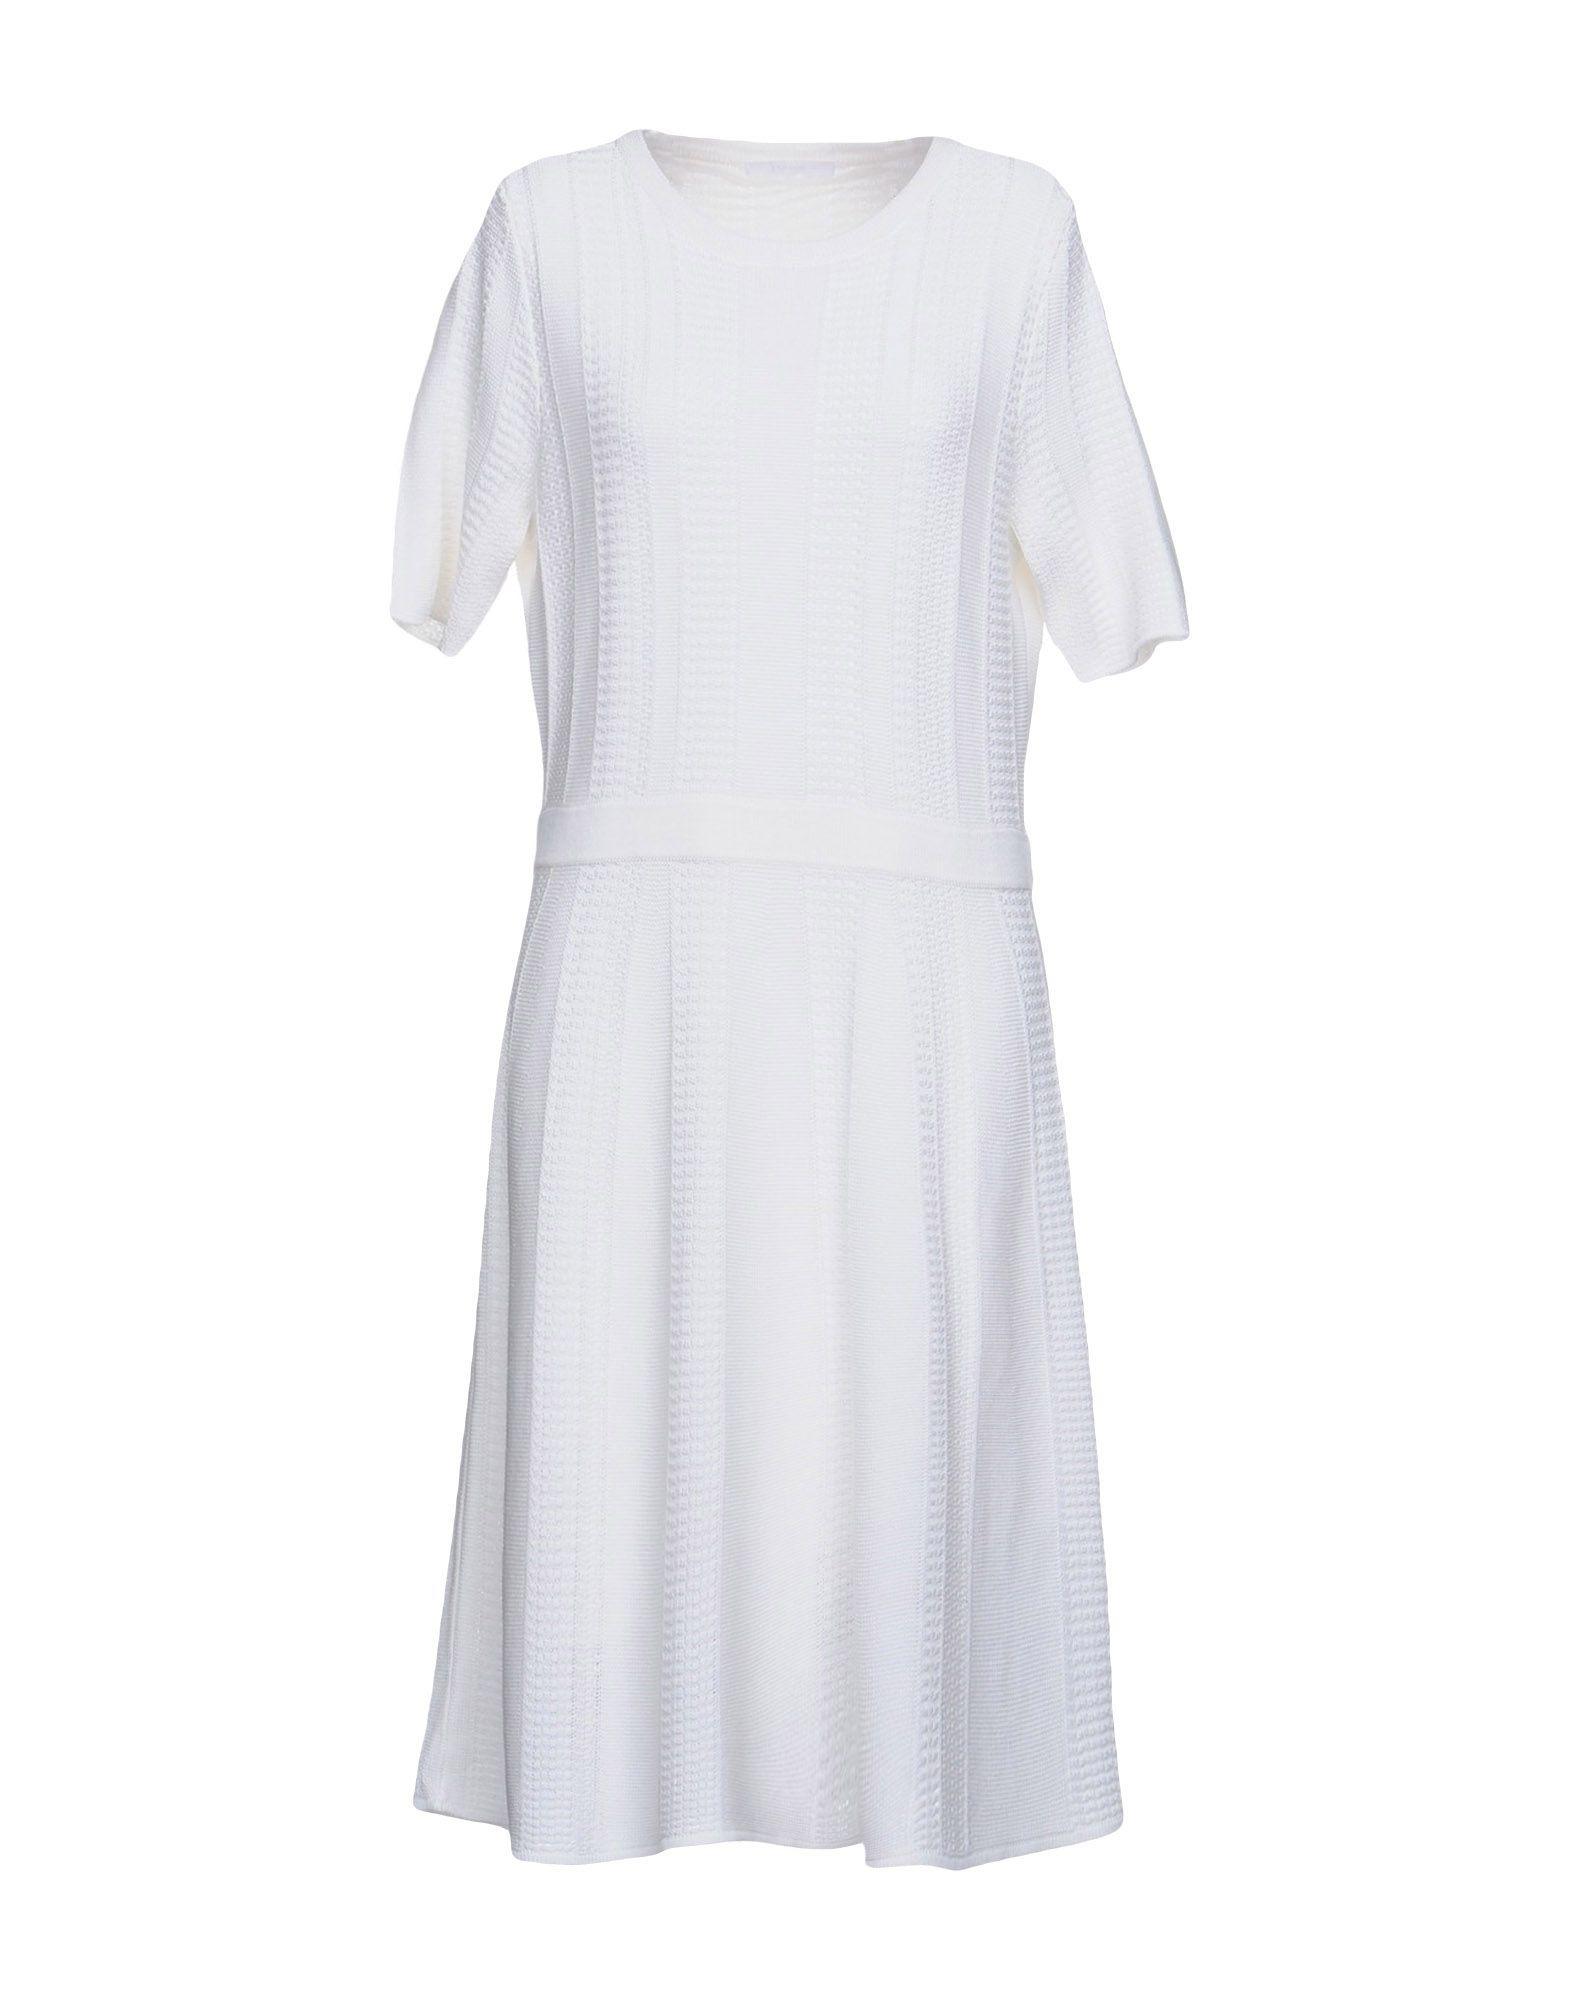 BOSS by Hugo Boss Synthetic Knee-length Dress in White - Lyst